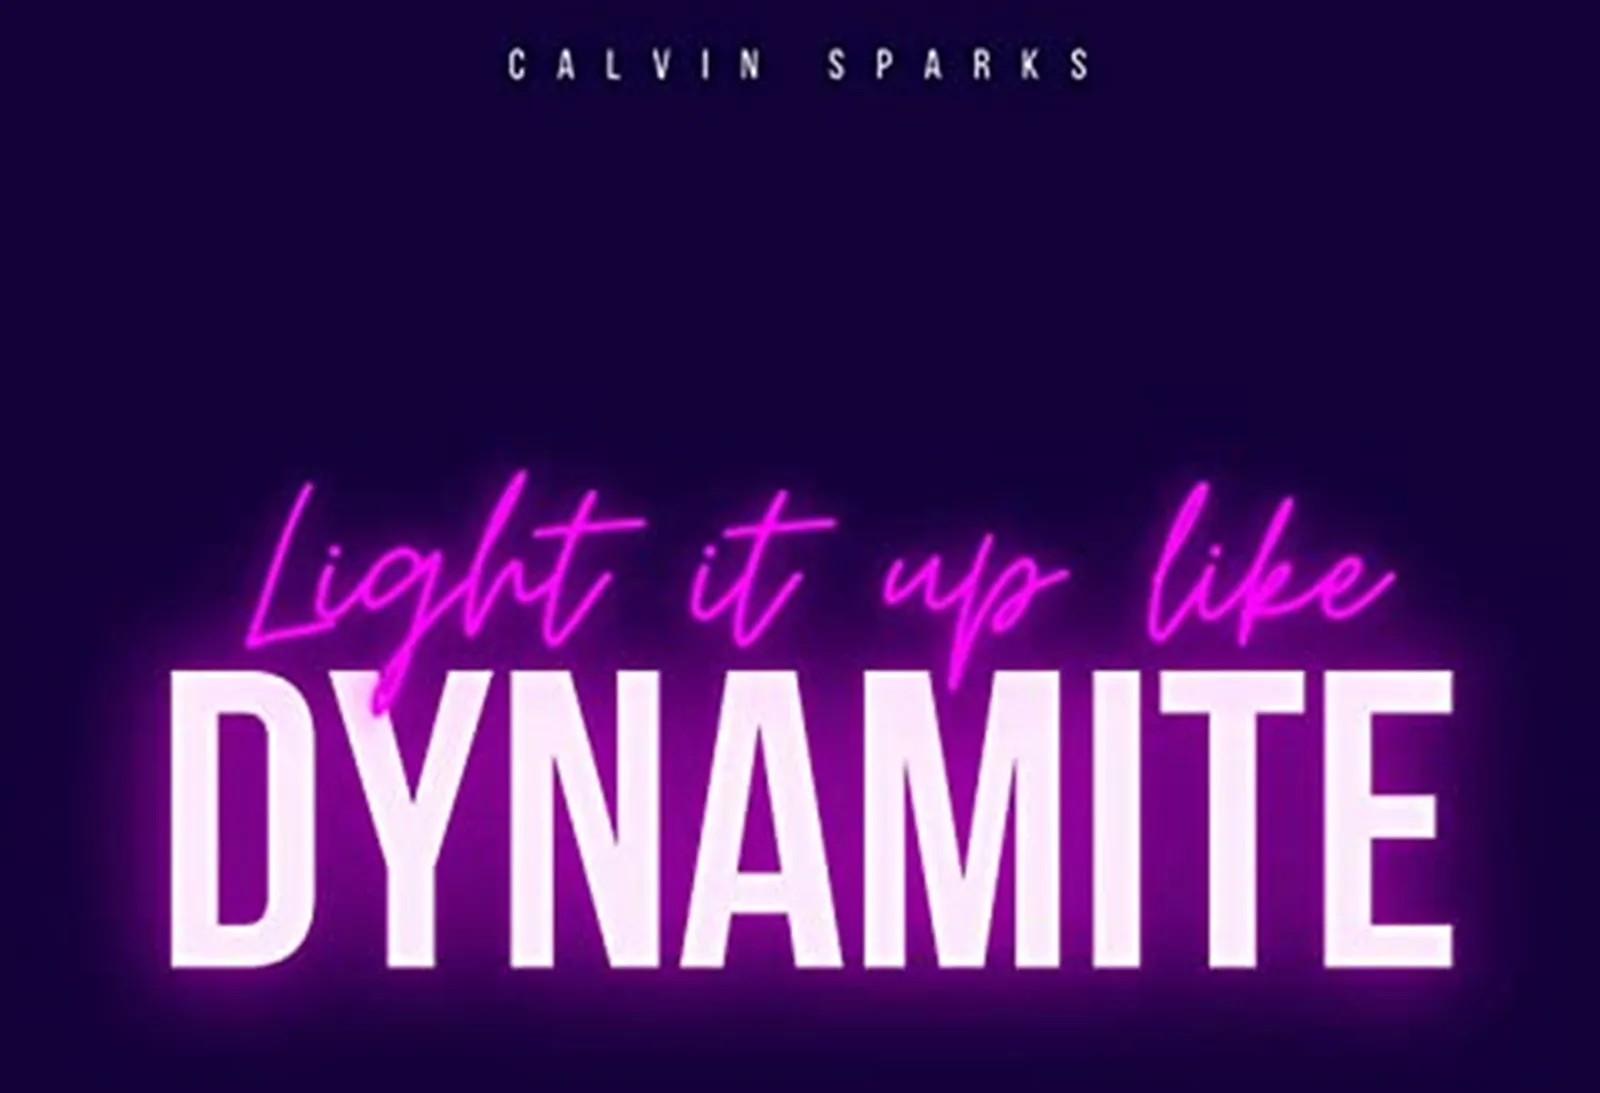 Calvin Sparks Diduga Mengklaim Lagu 'Dynamite' BTS, Apa Reaksi ARMY?